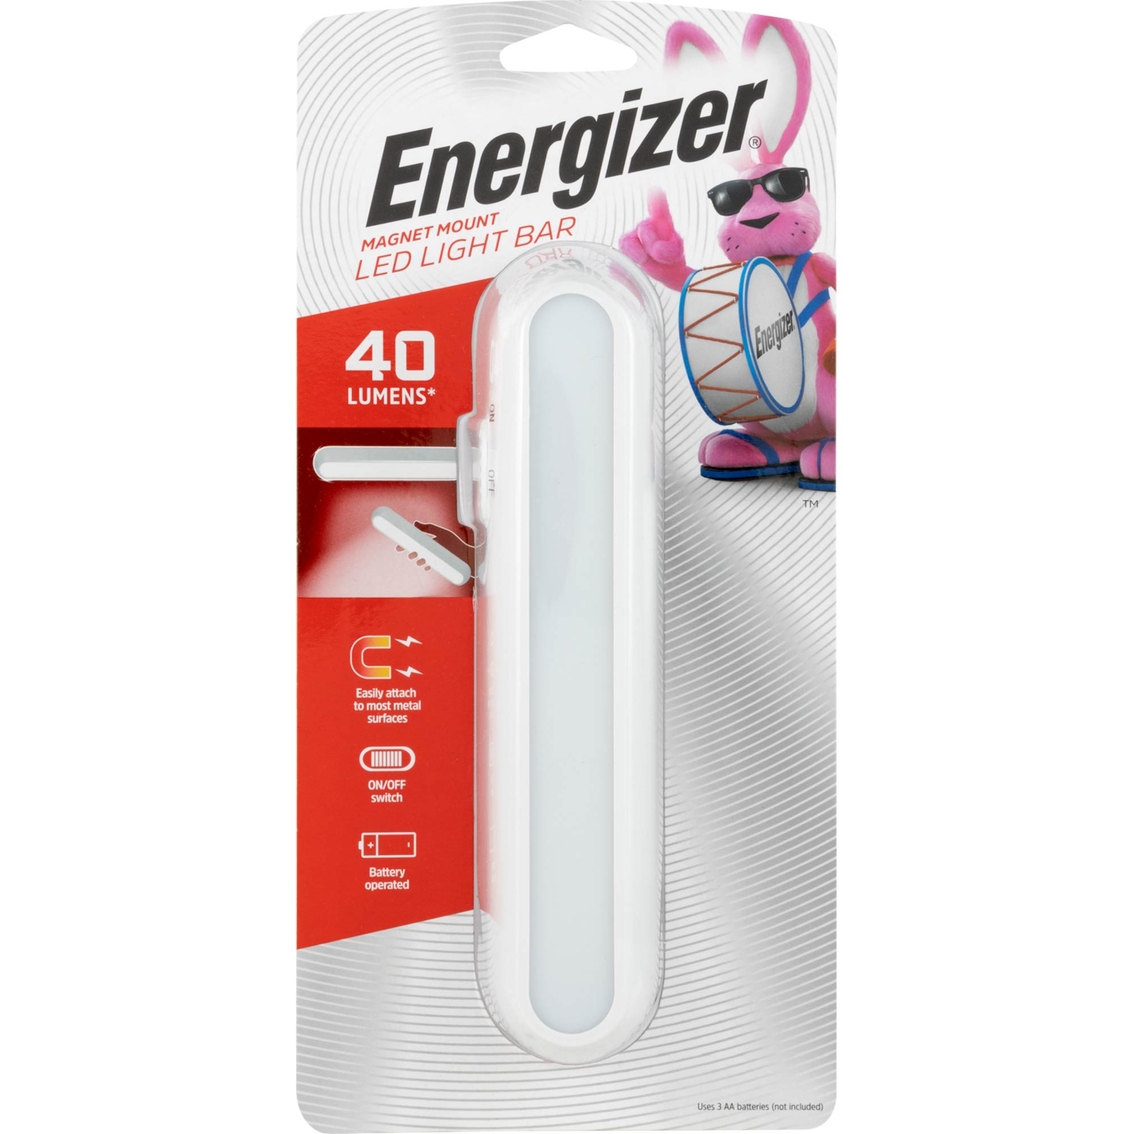 Energizer Battery Operated LED Magnet Mount Light Bar - Image 3 of 5